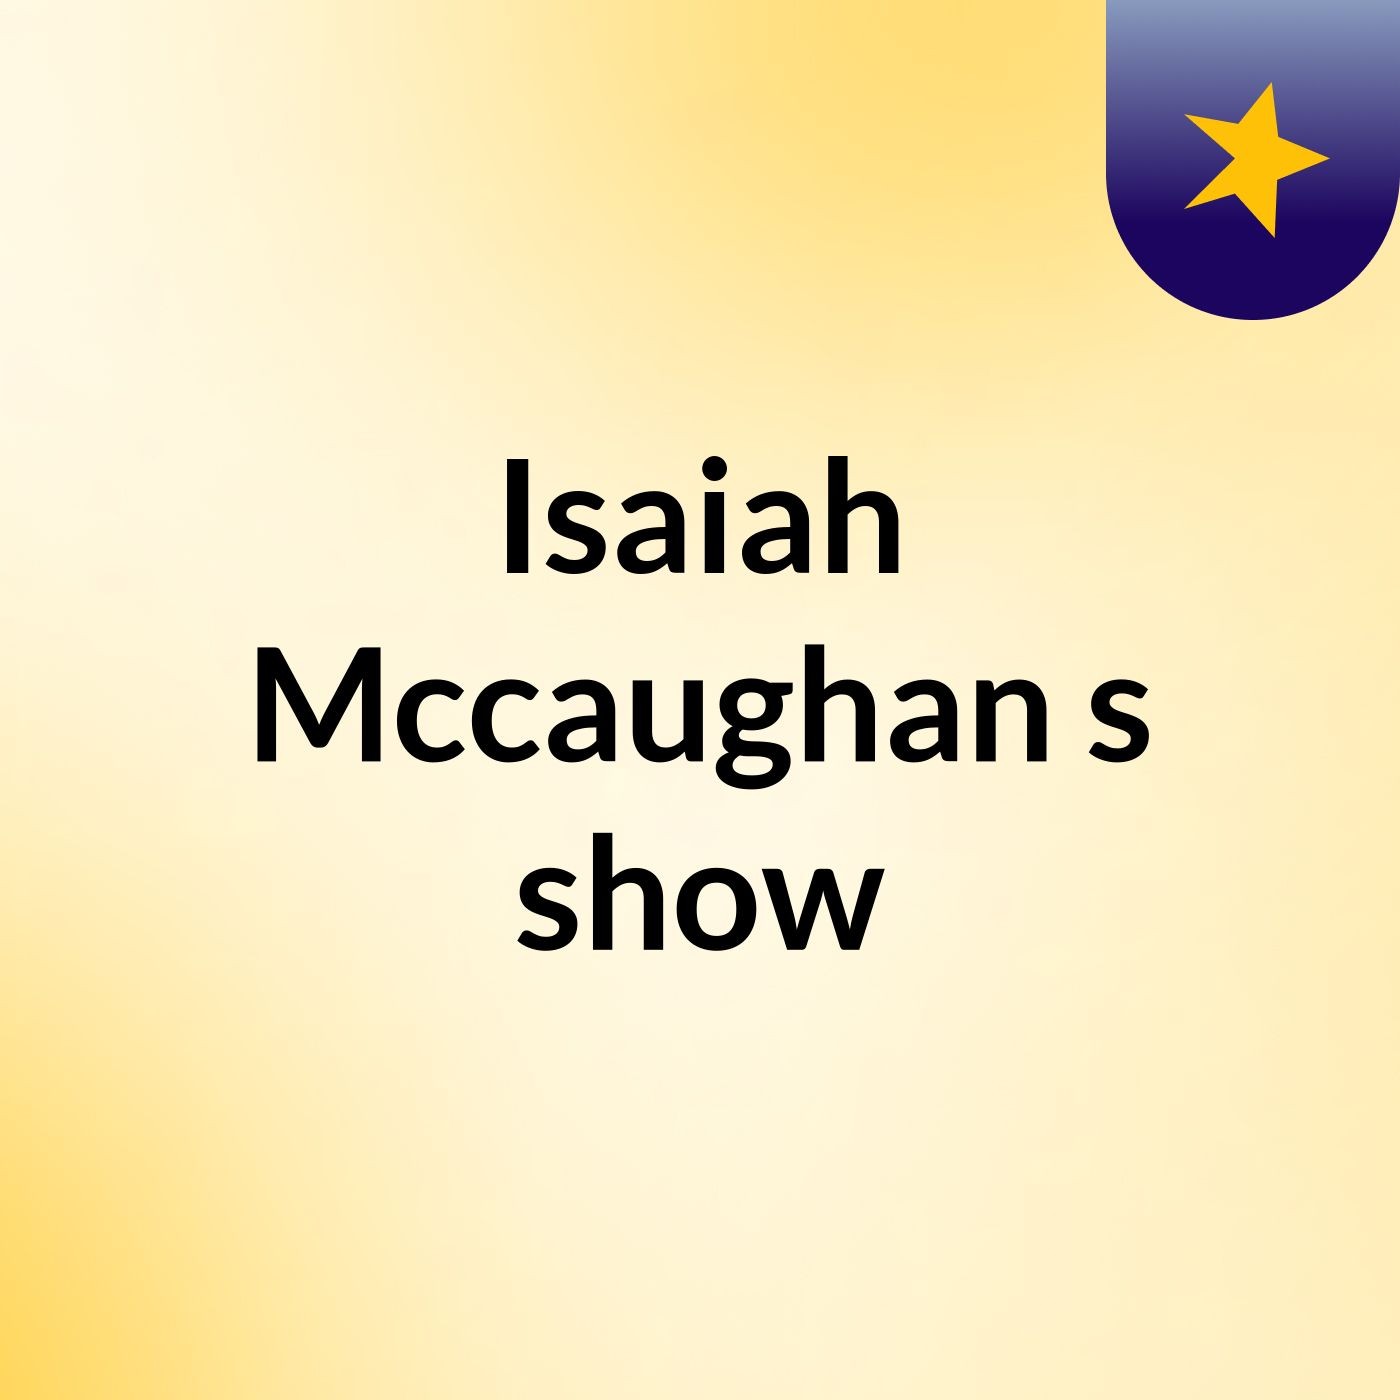 Episode 2 - Isaiah Mccaughan's show